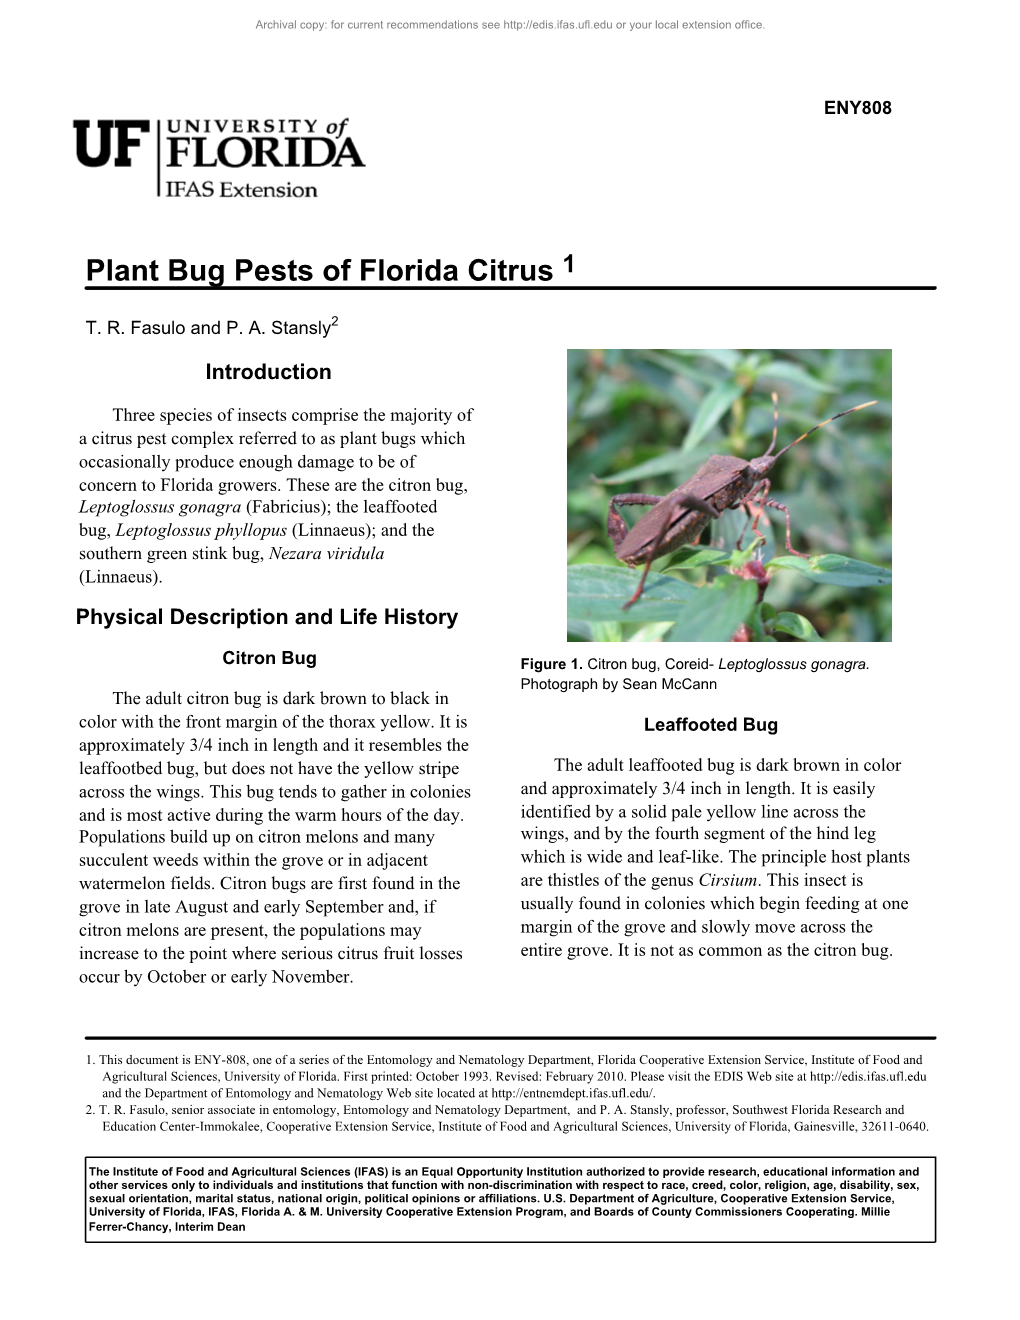 Plant Bug Pests of Florida Citrus 1